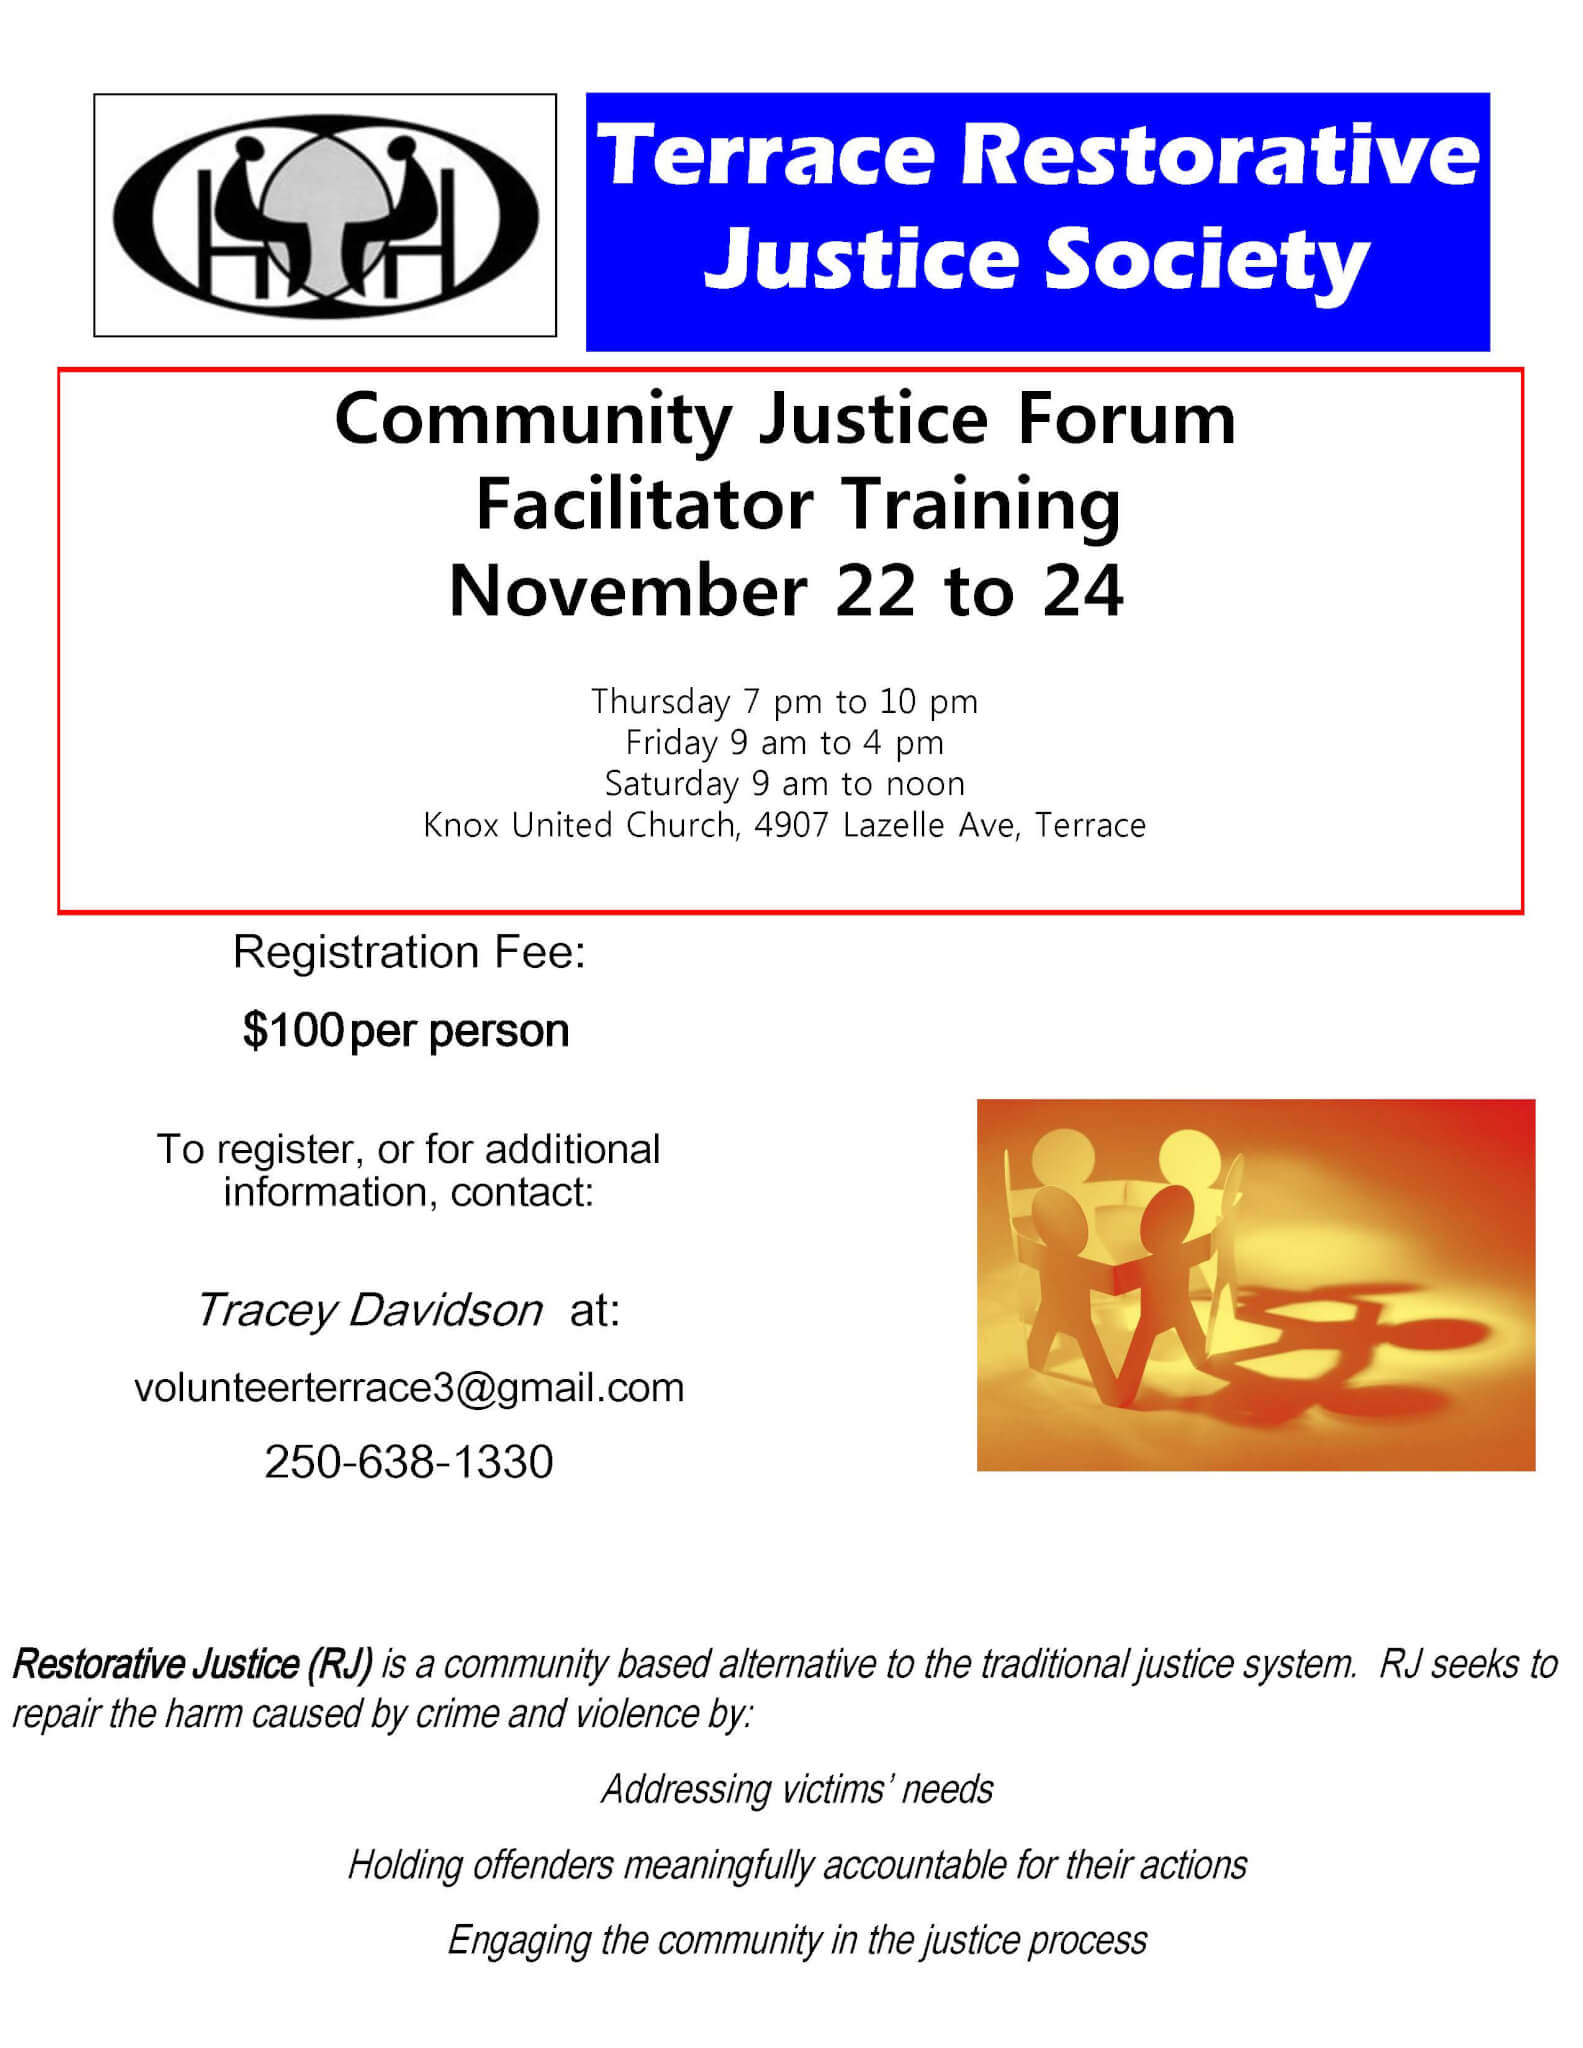 Community Justice Forum Facilitator Training Nov 22 to 24